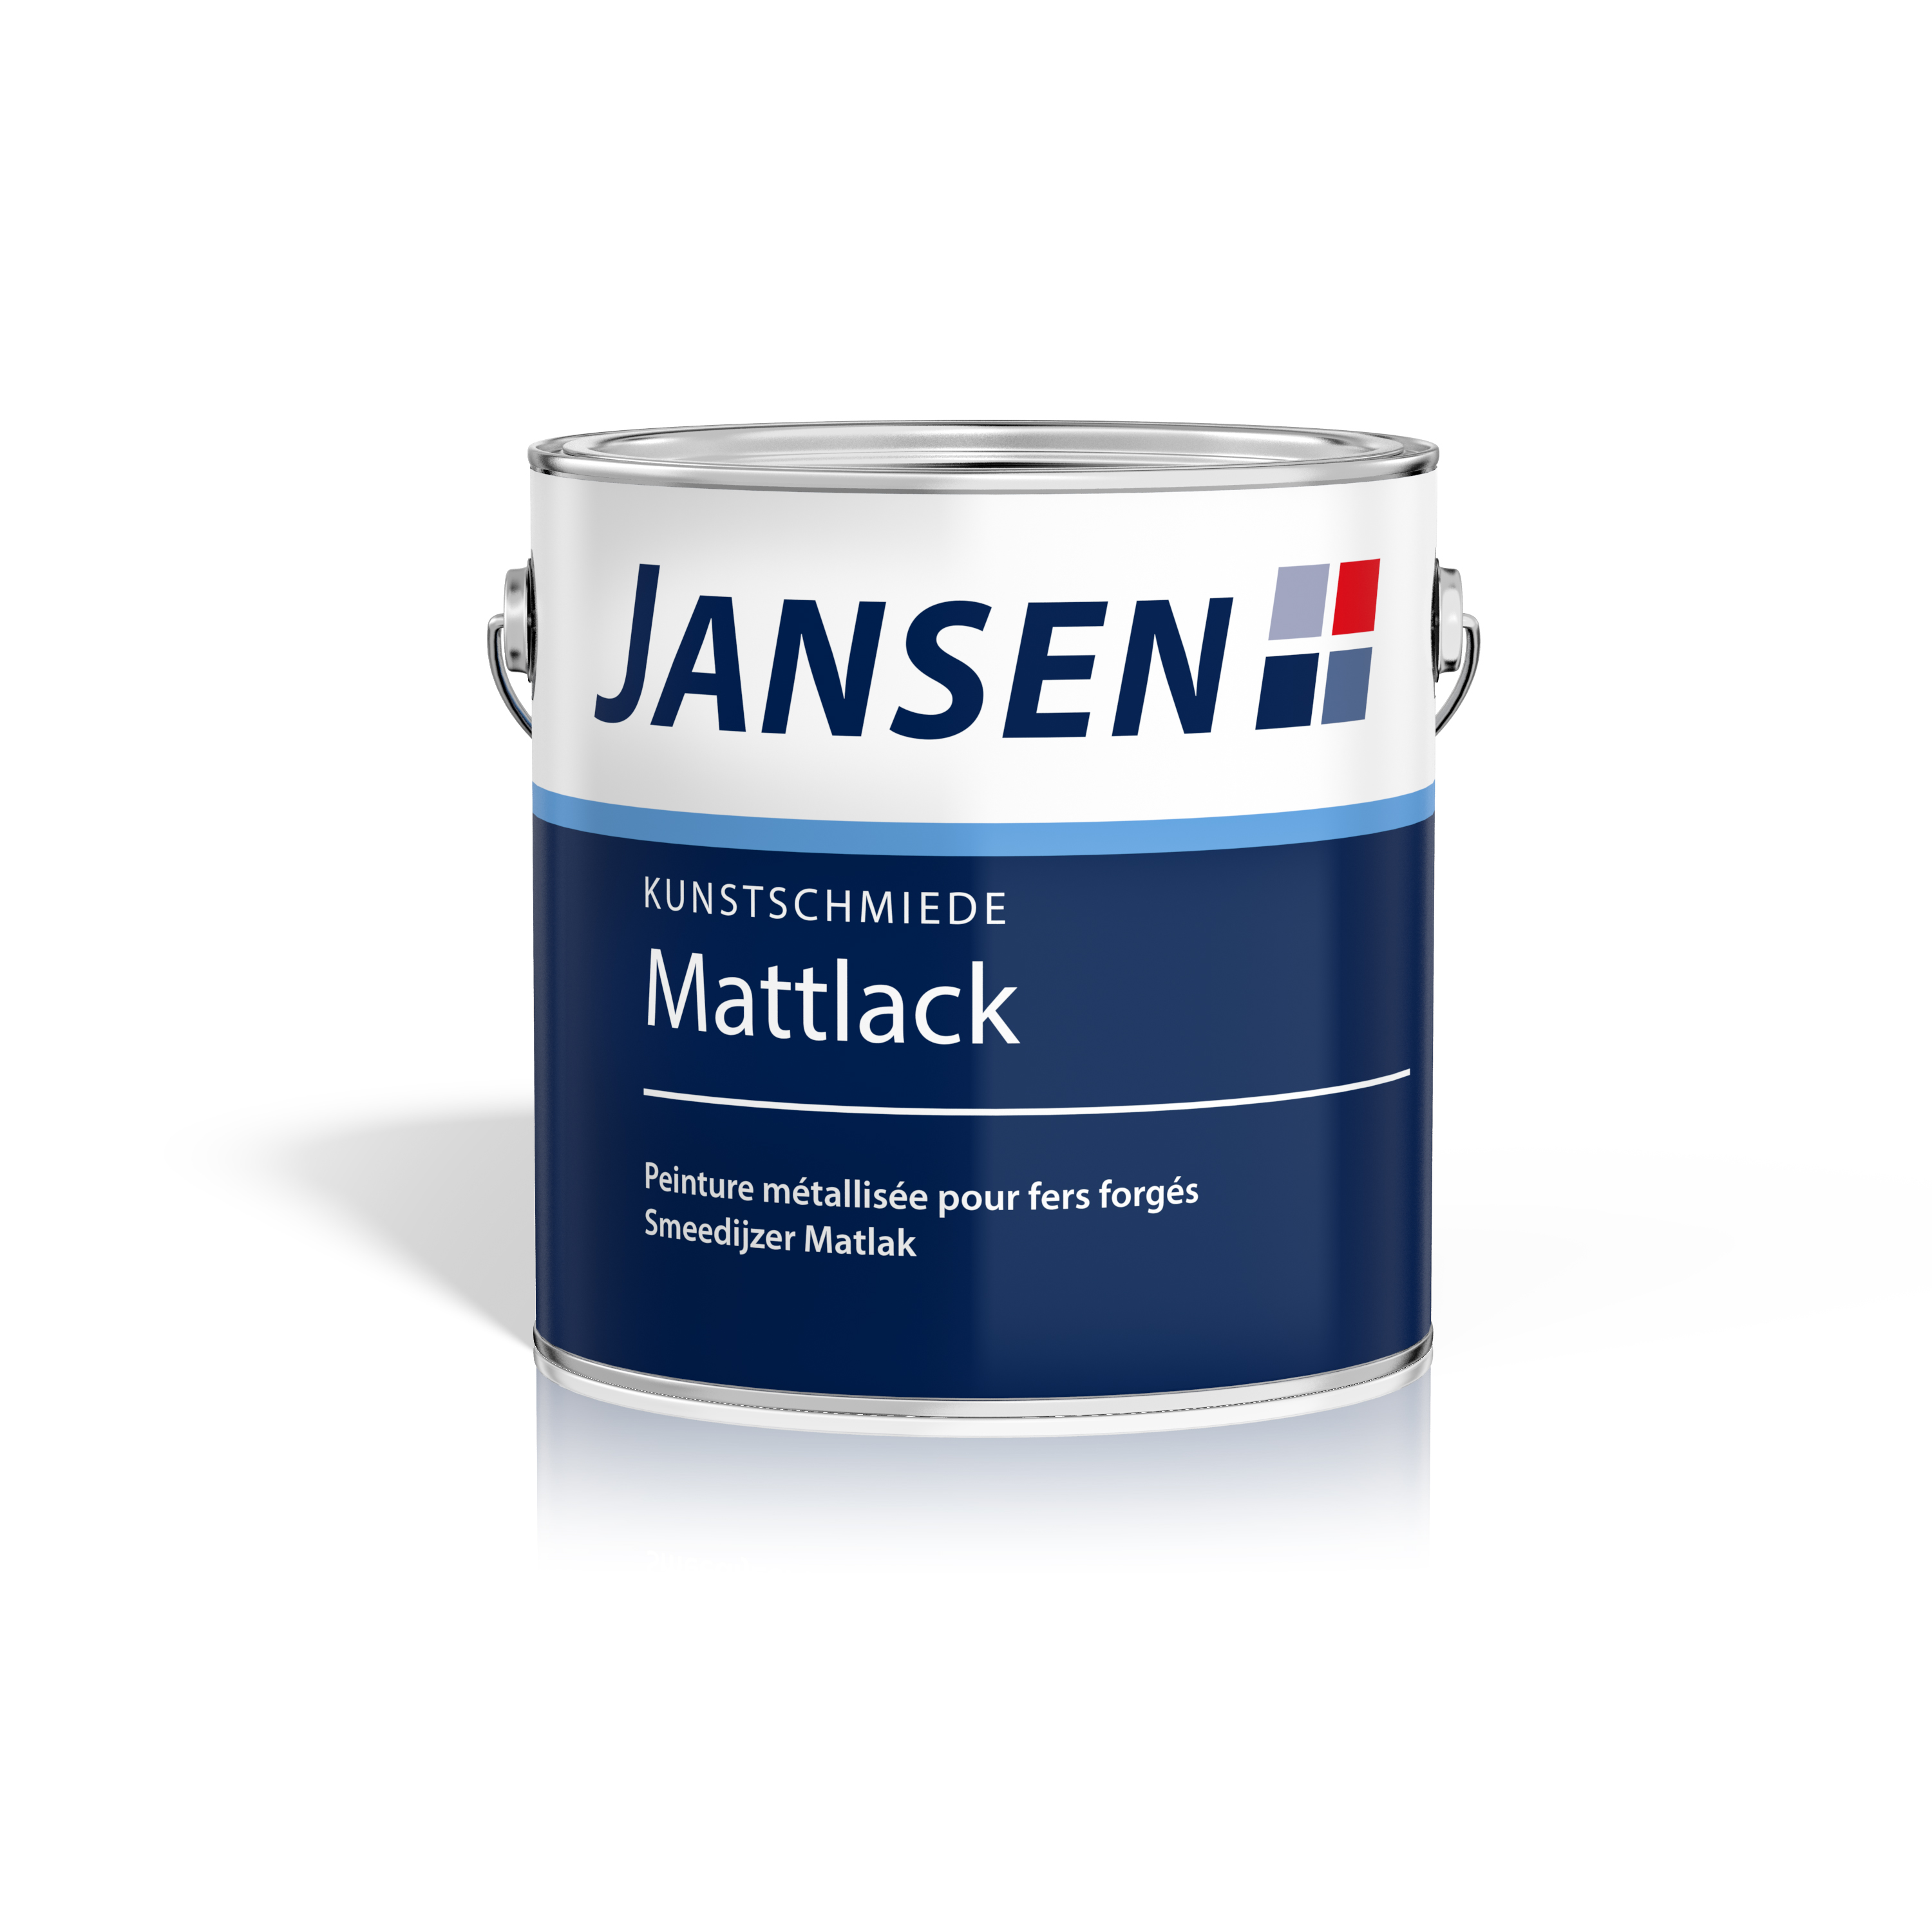 Jansen Kunstschmiede-Mattlack